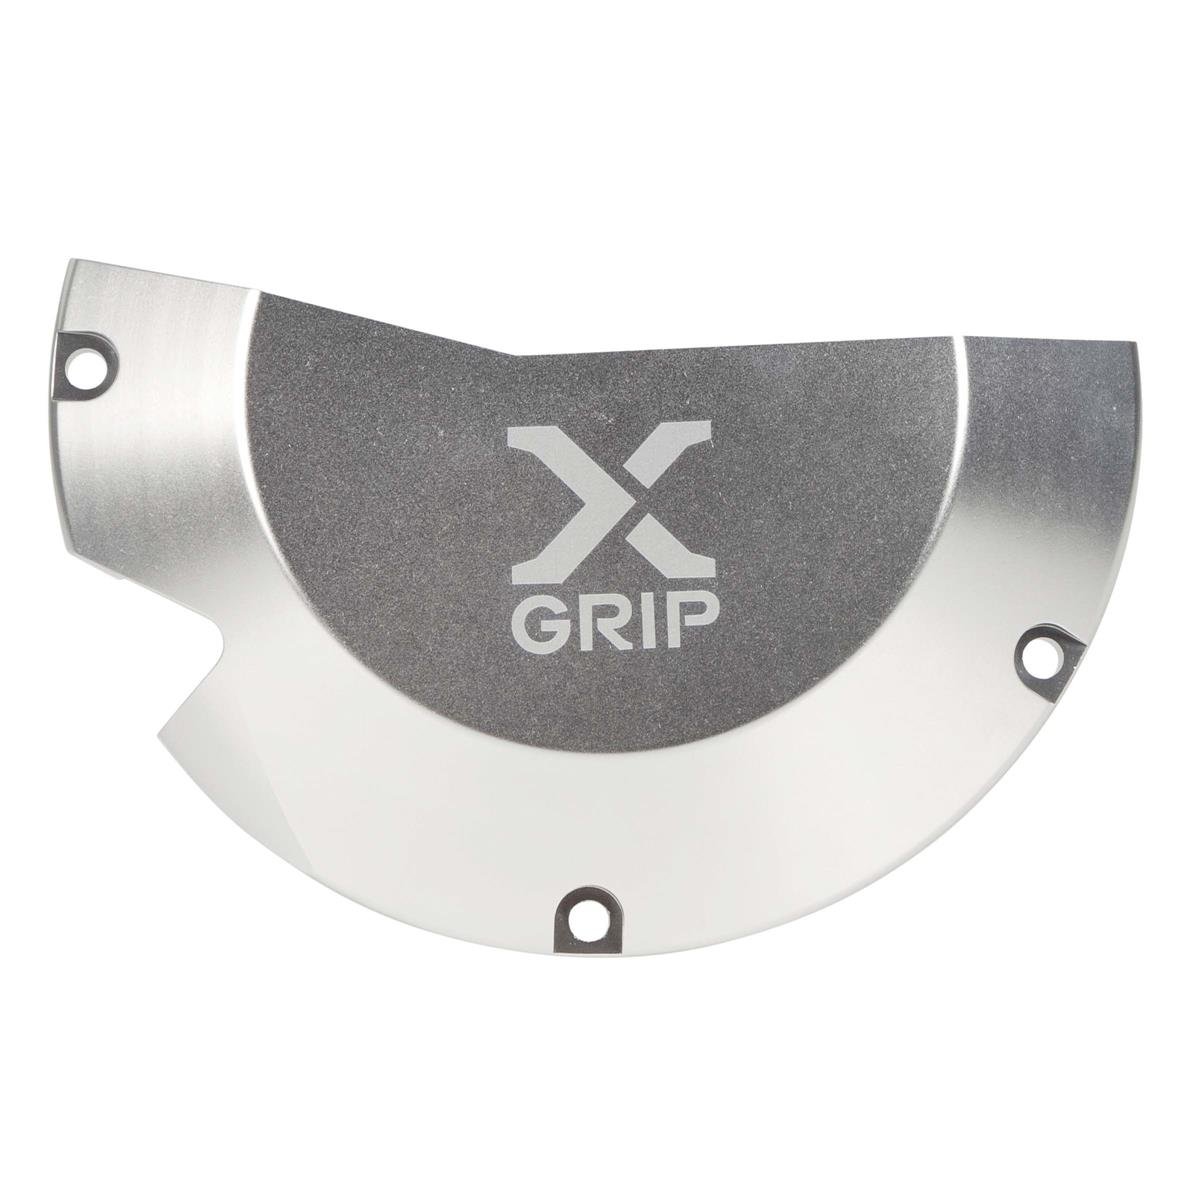 X-Grip Kupplungsschutz Clutch Cover Guard Beta RR 250/300, XTrainer 18-20, Silber